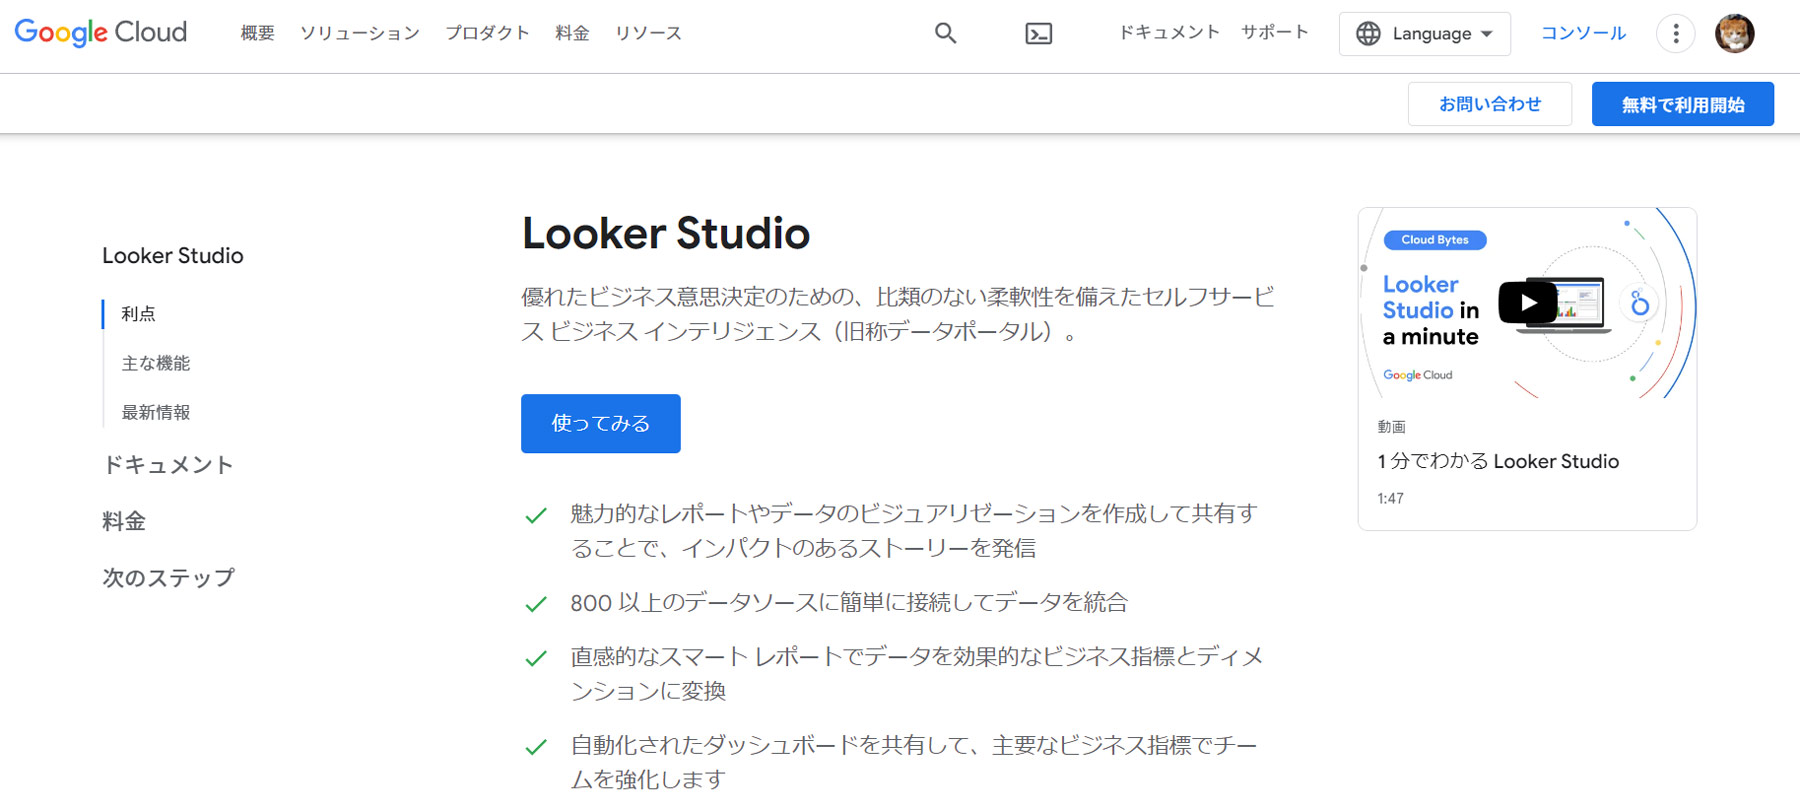 Looker Studio公式Webサイト